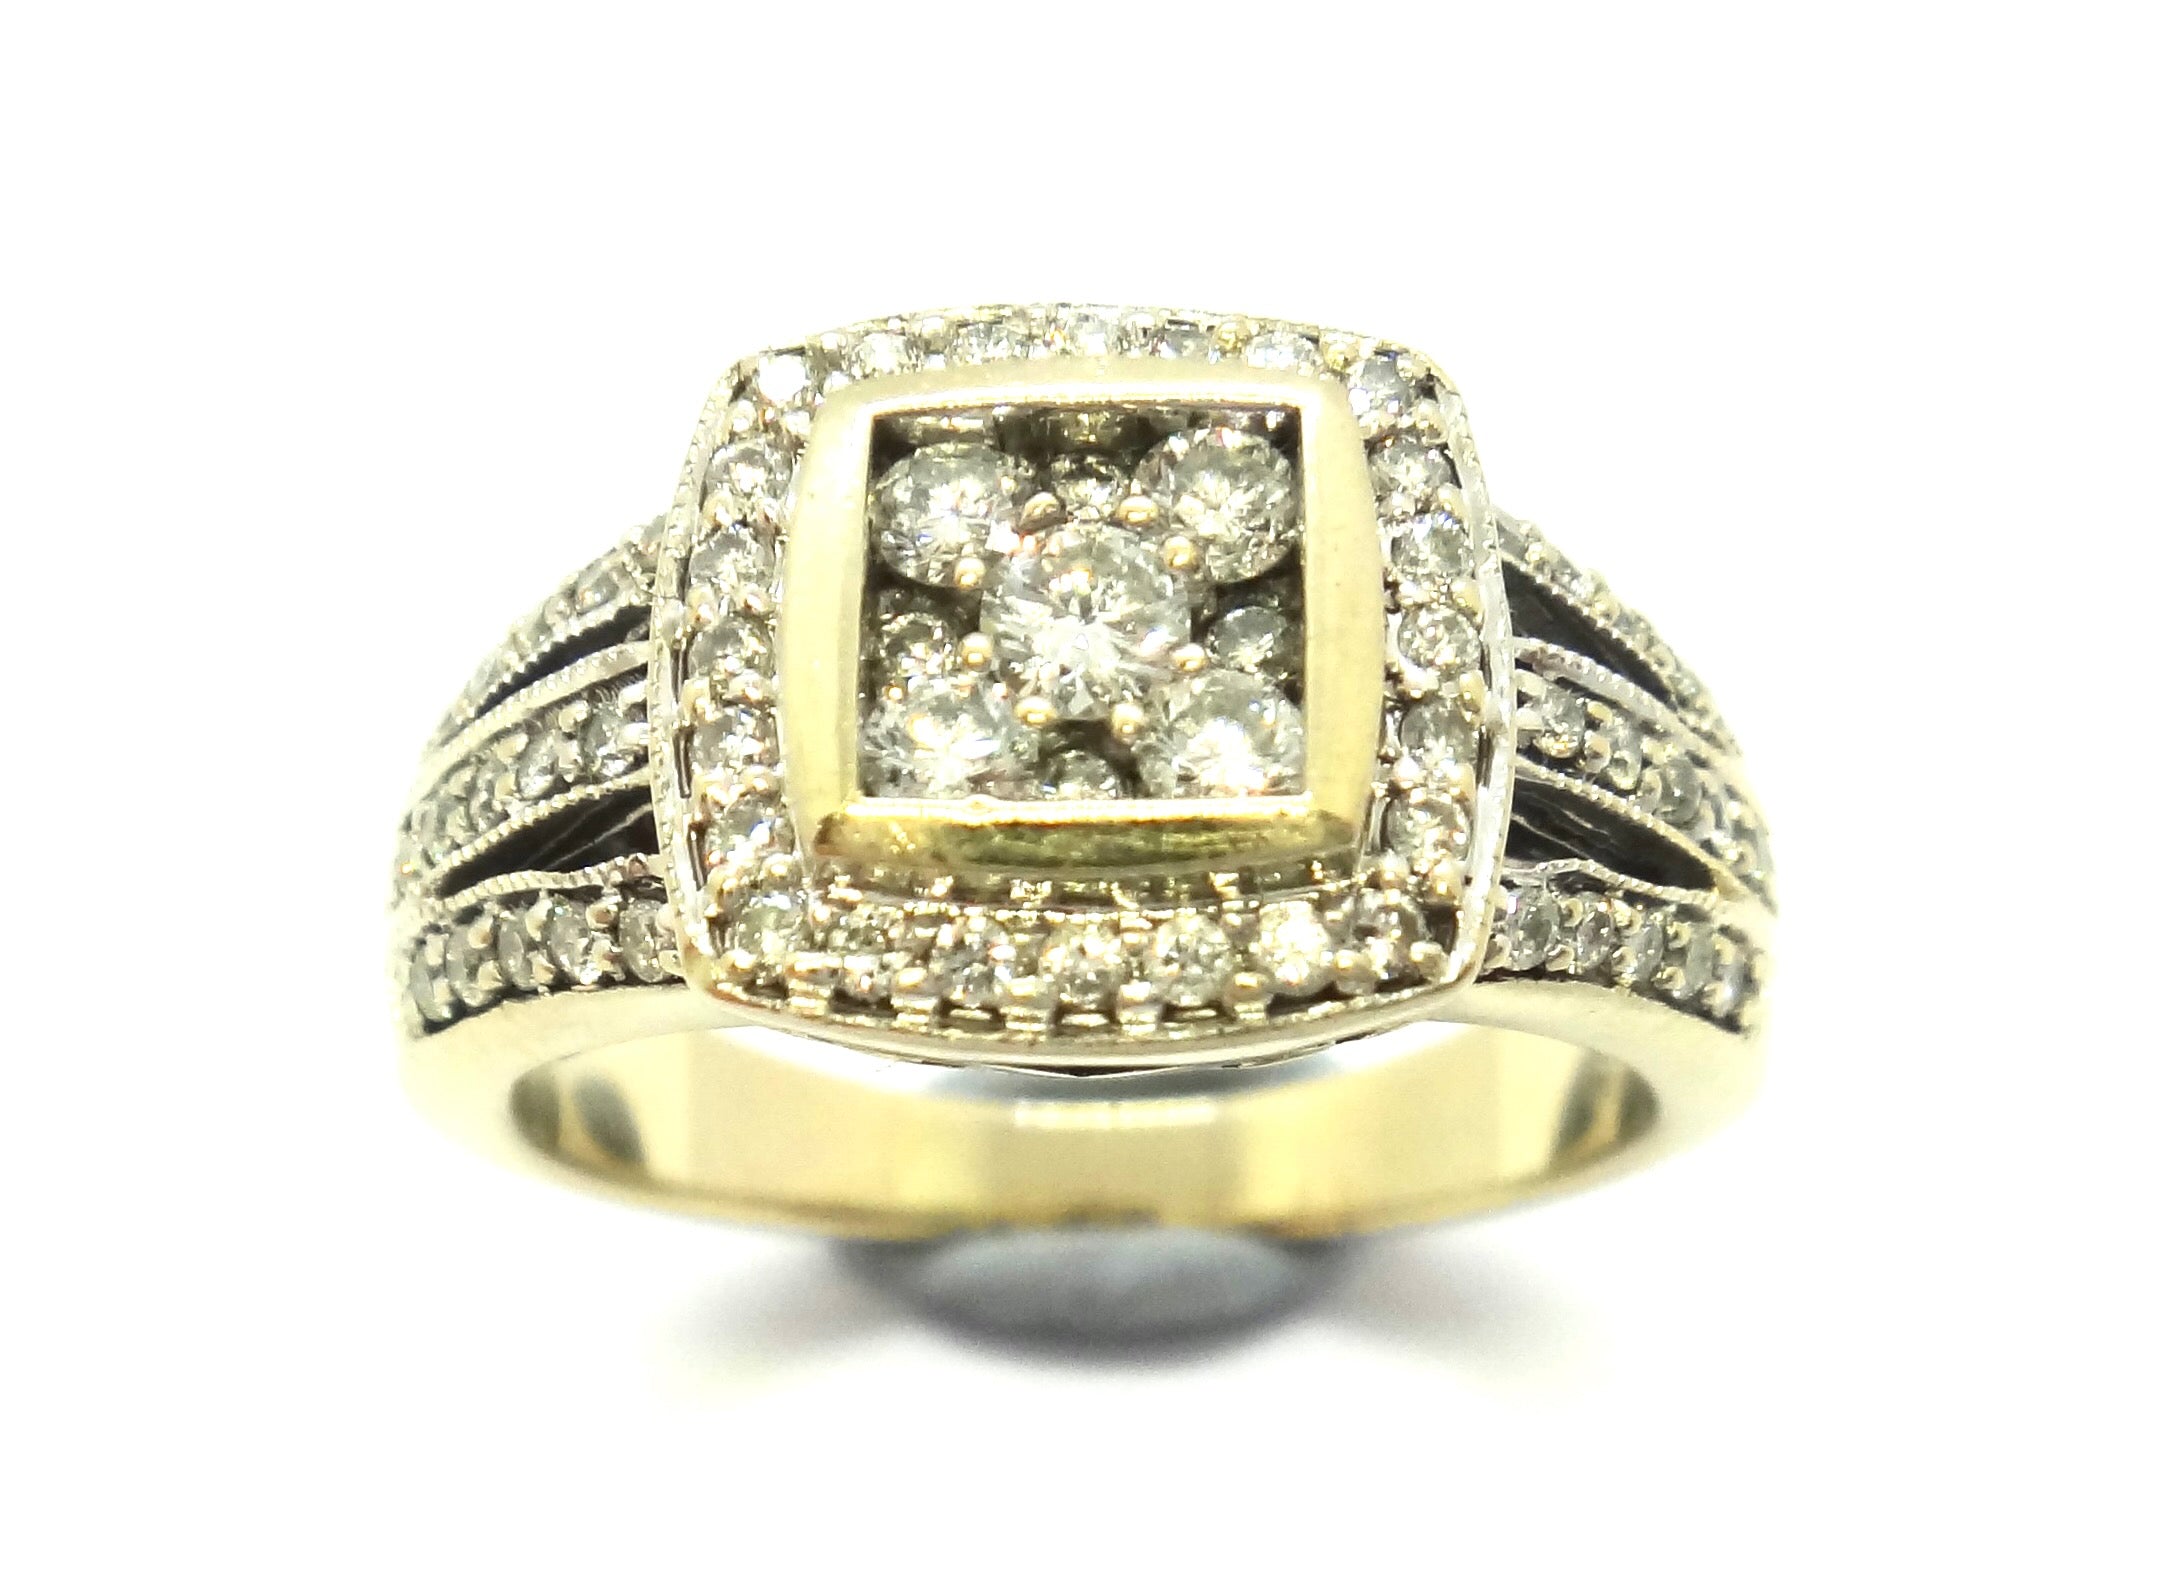 18CT Yellow GOLD & Multi RBC Diamond Ring, VAL $3,875